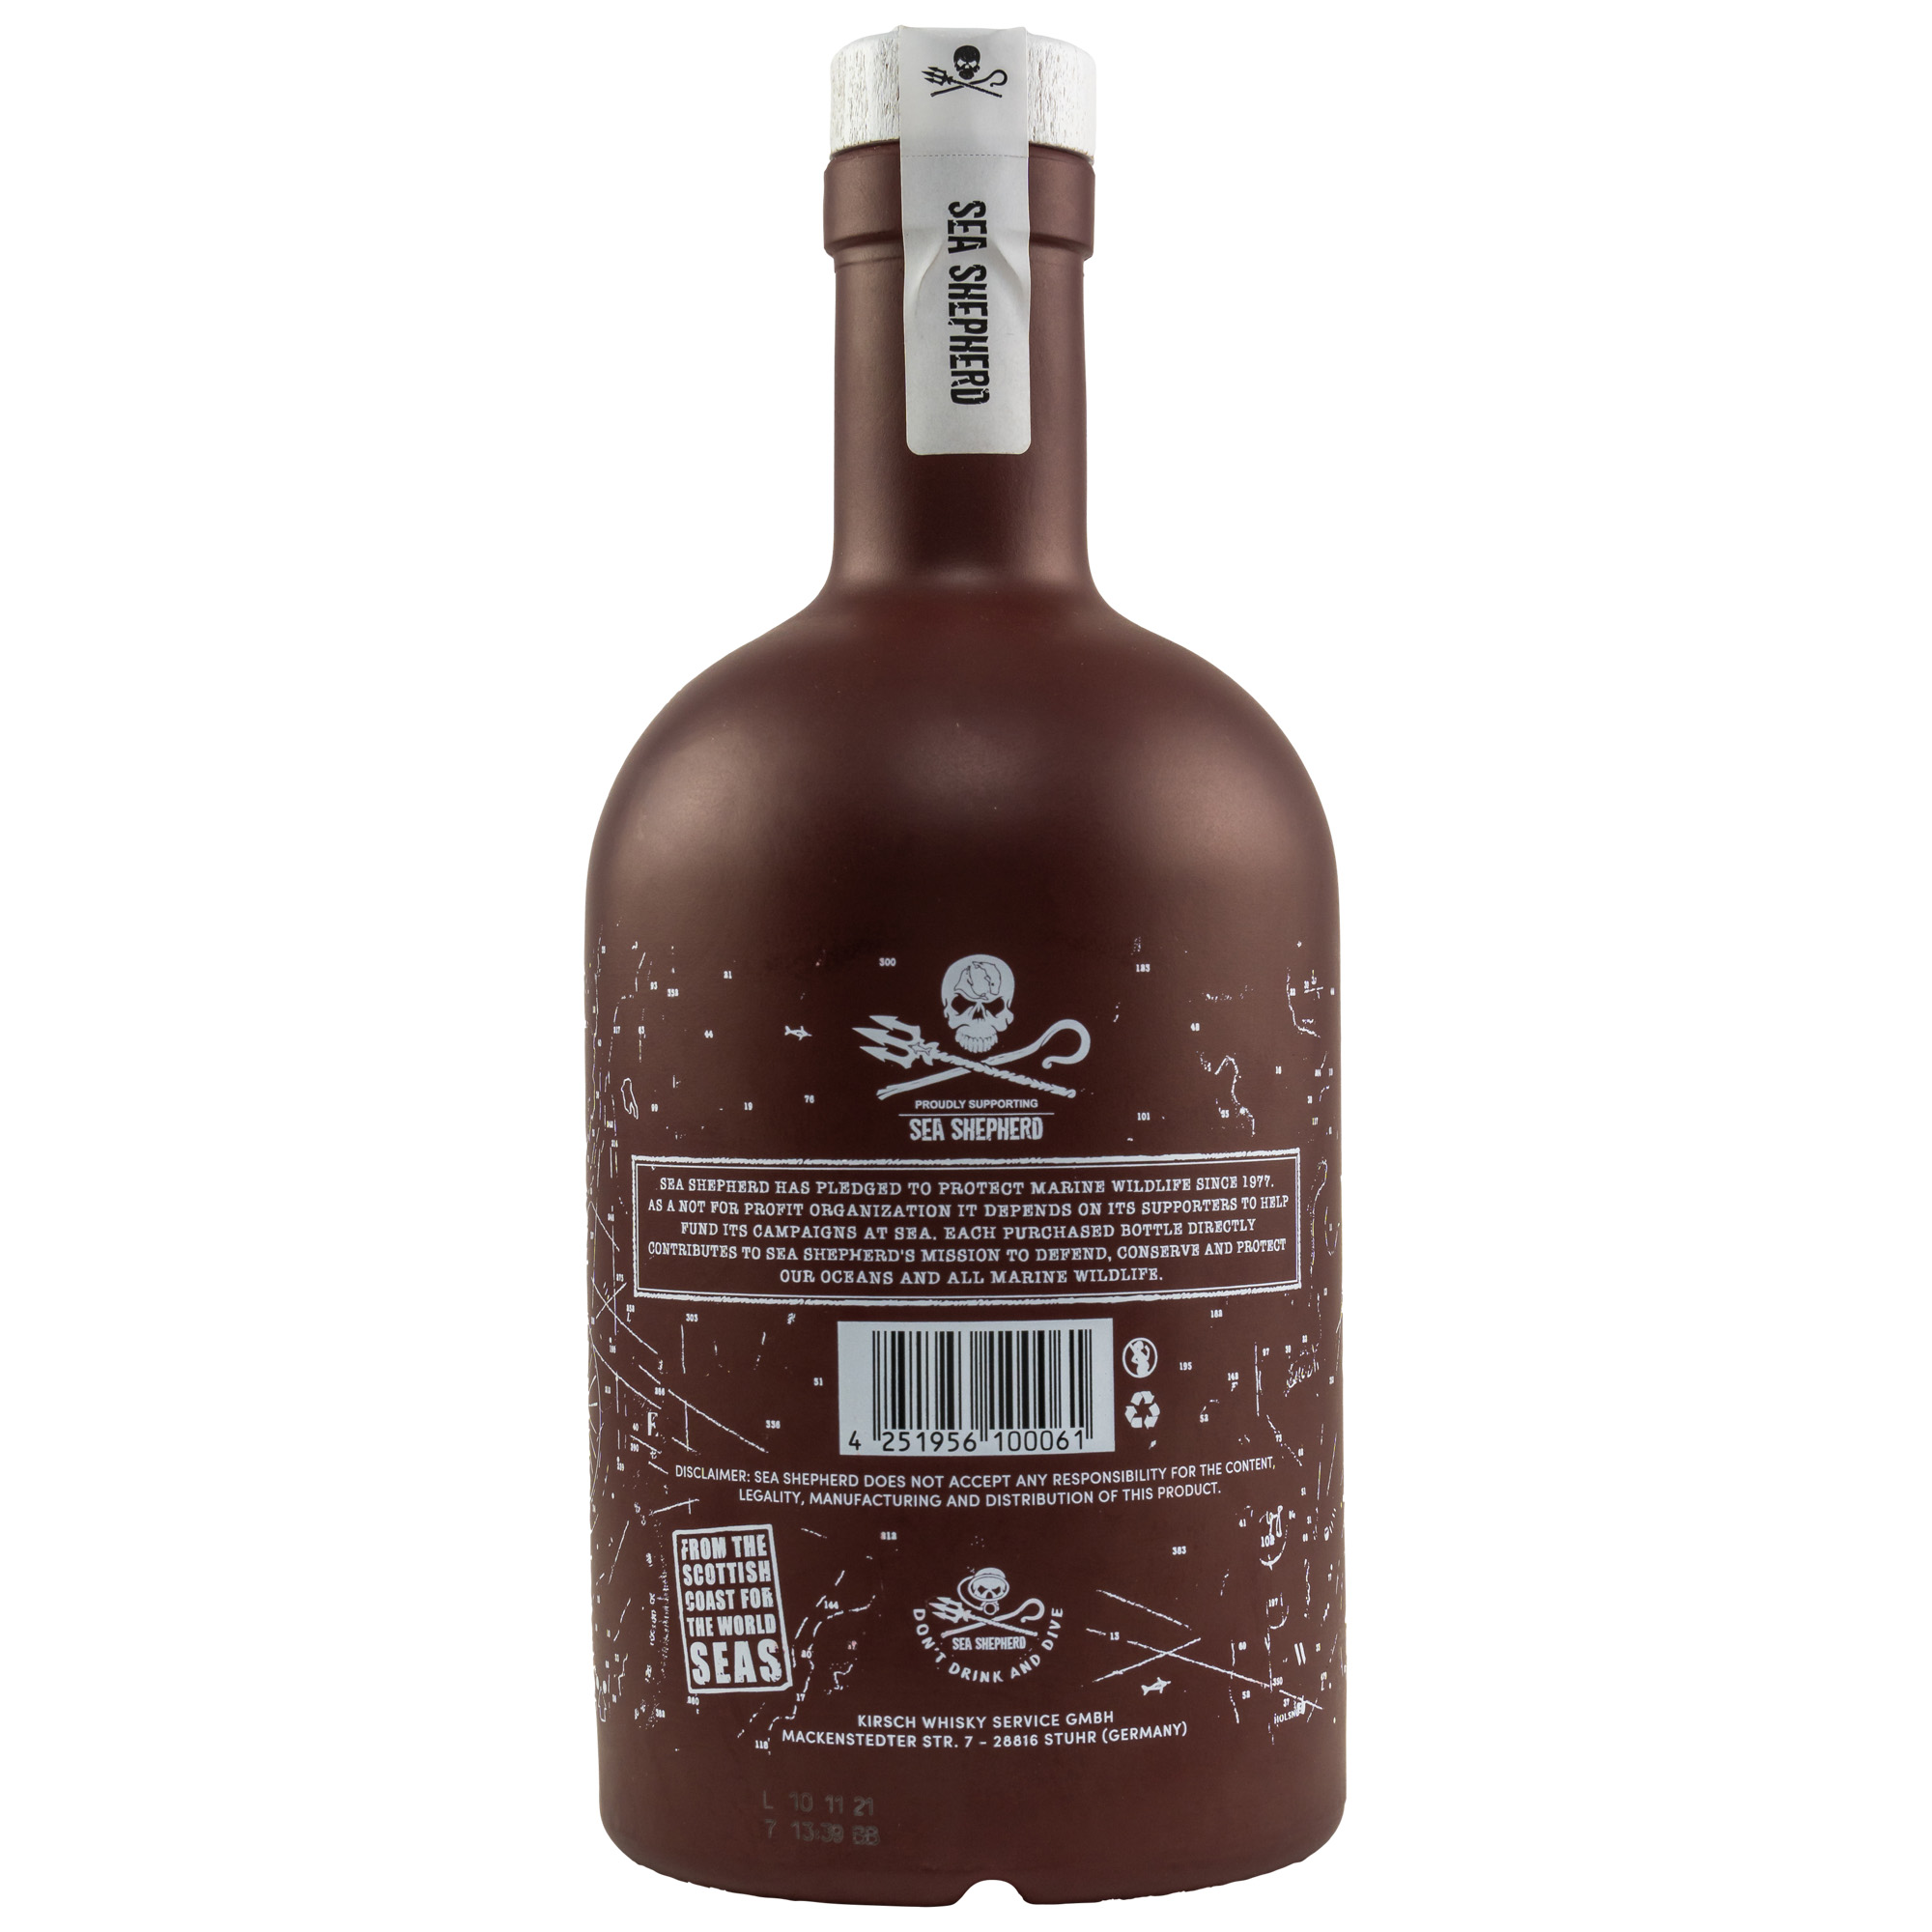 Sea Shepherd - Sherry Edition - Islay Single Malt Scotch Whisky 0,7l 43%vol.